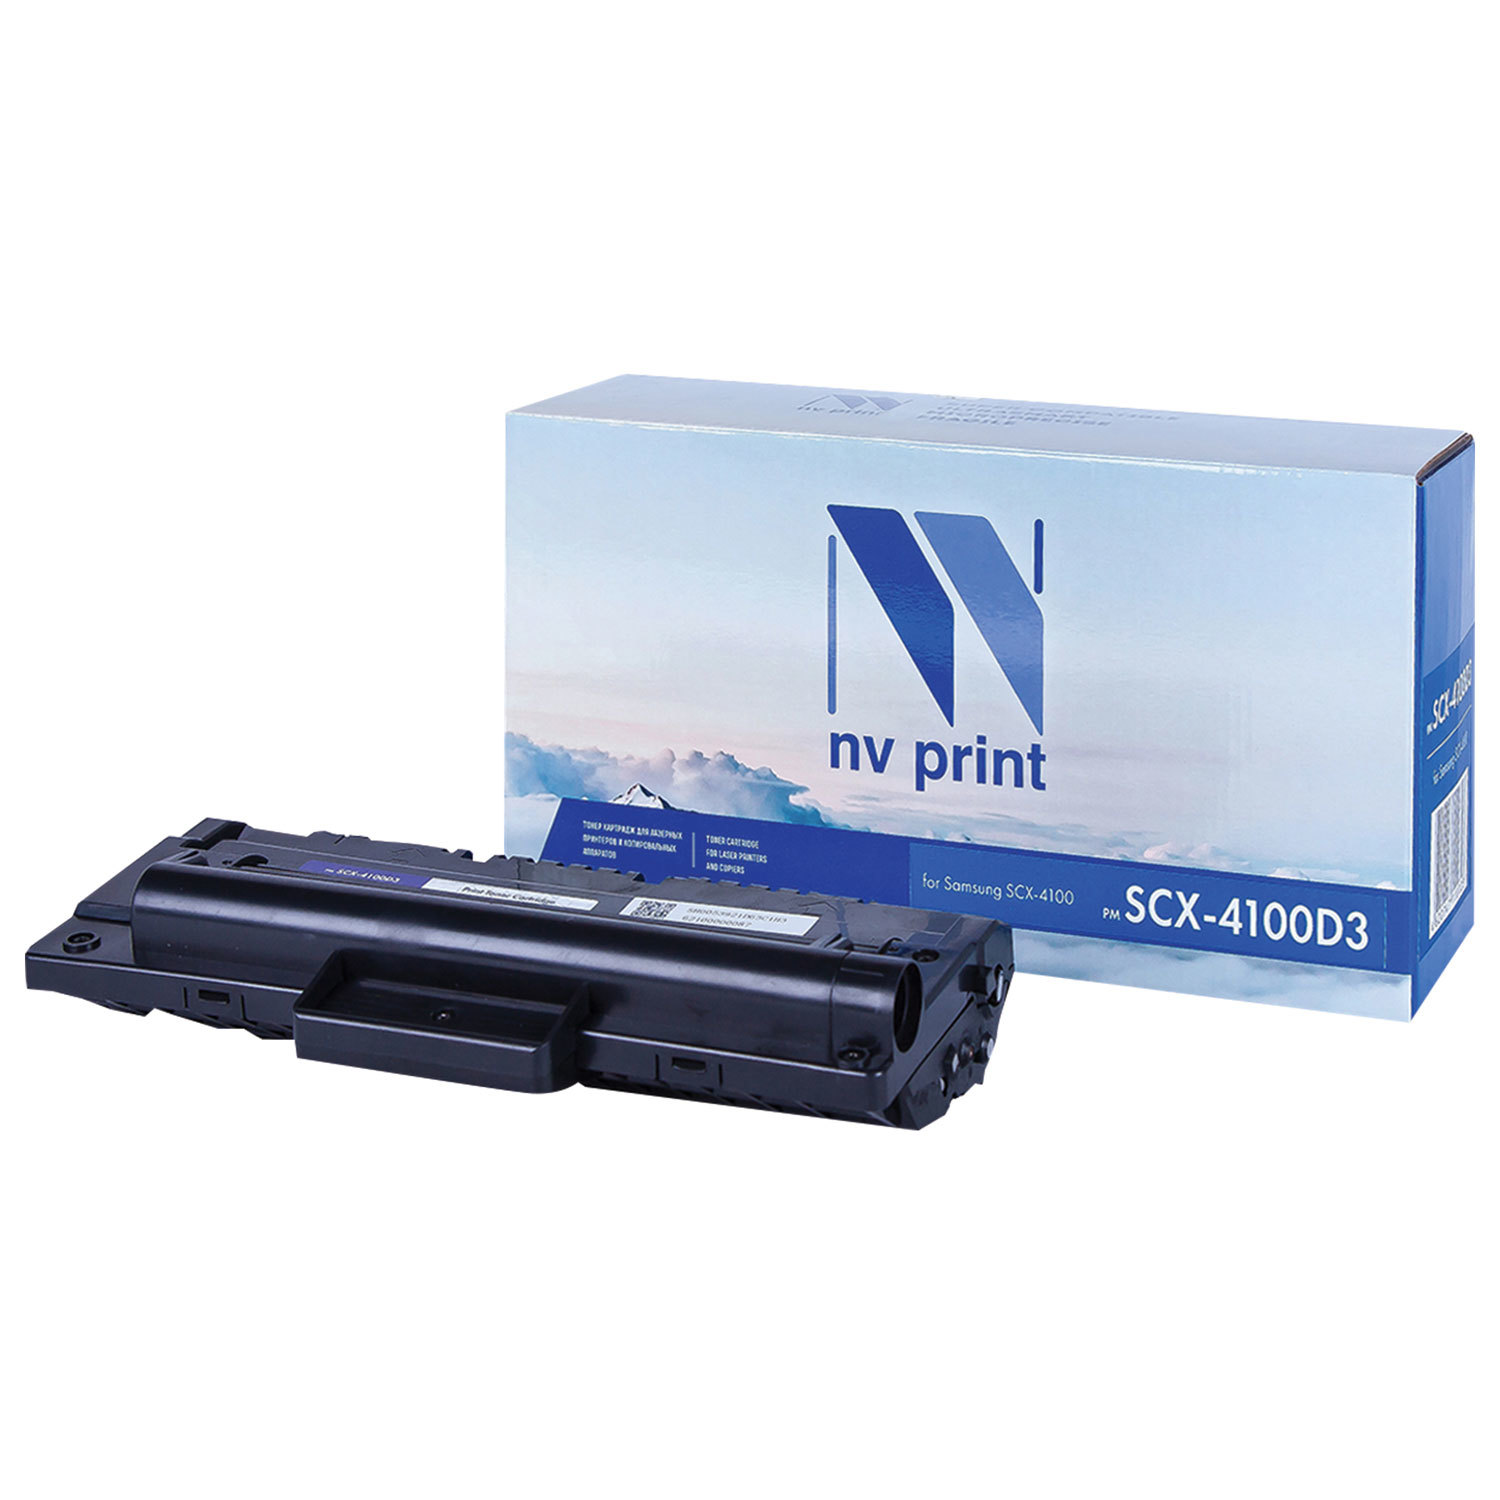  NV PRINT NV-SCX-4100D3